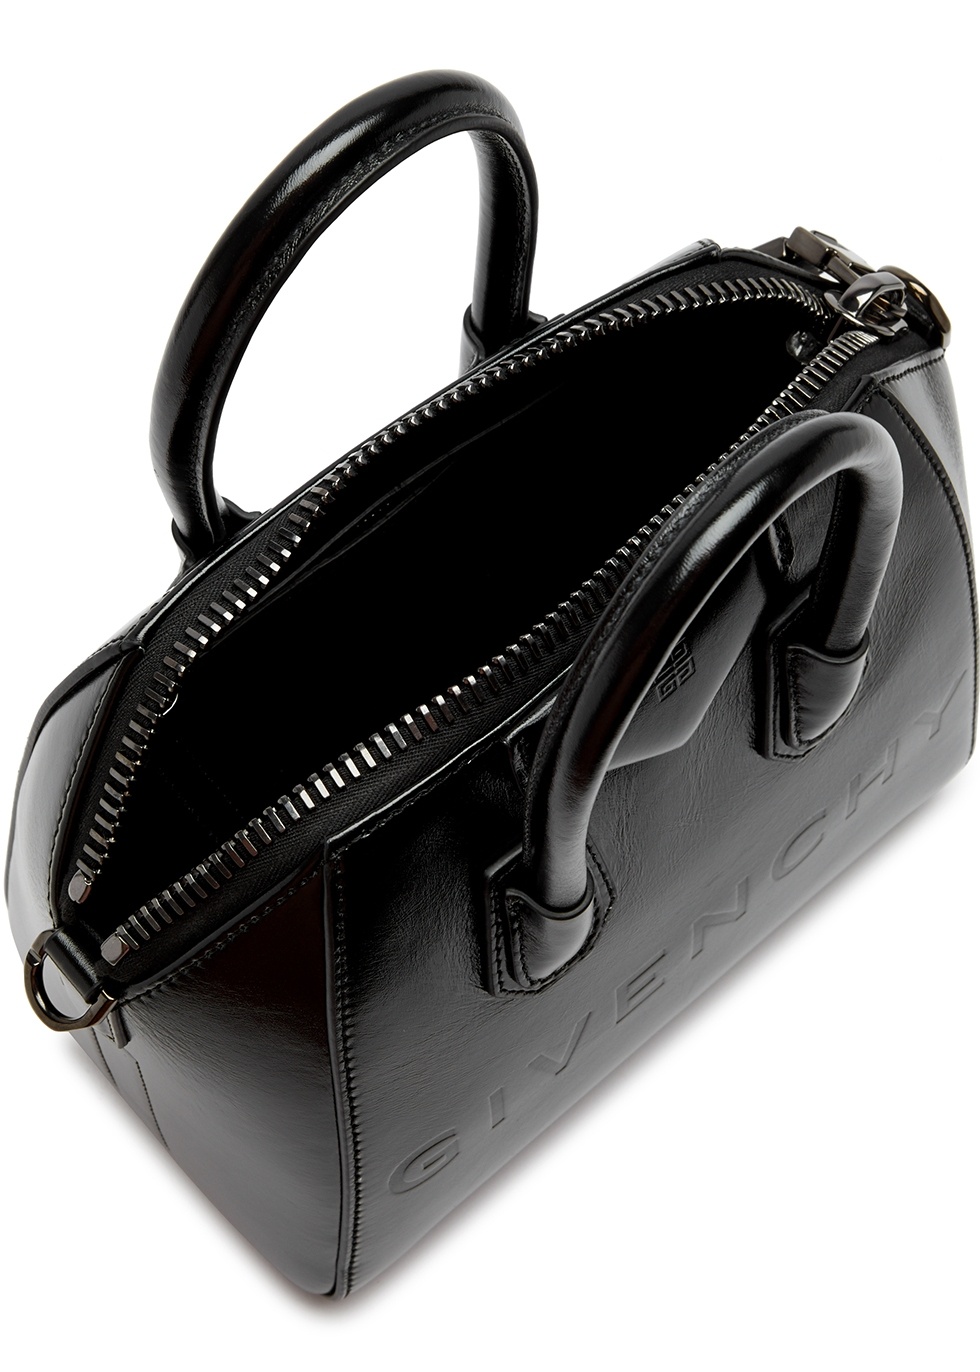 Givenchy Antigona Mini Leather Bag